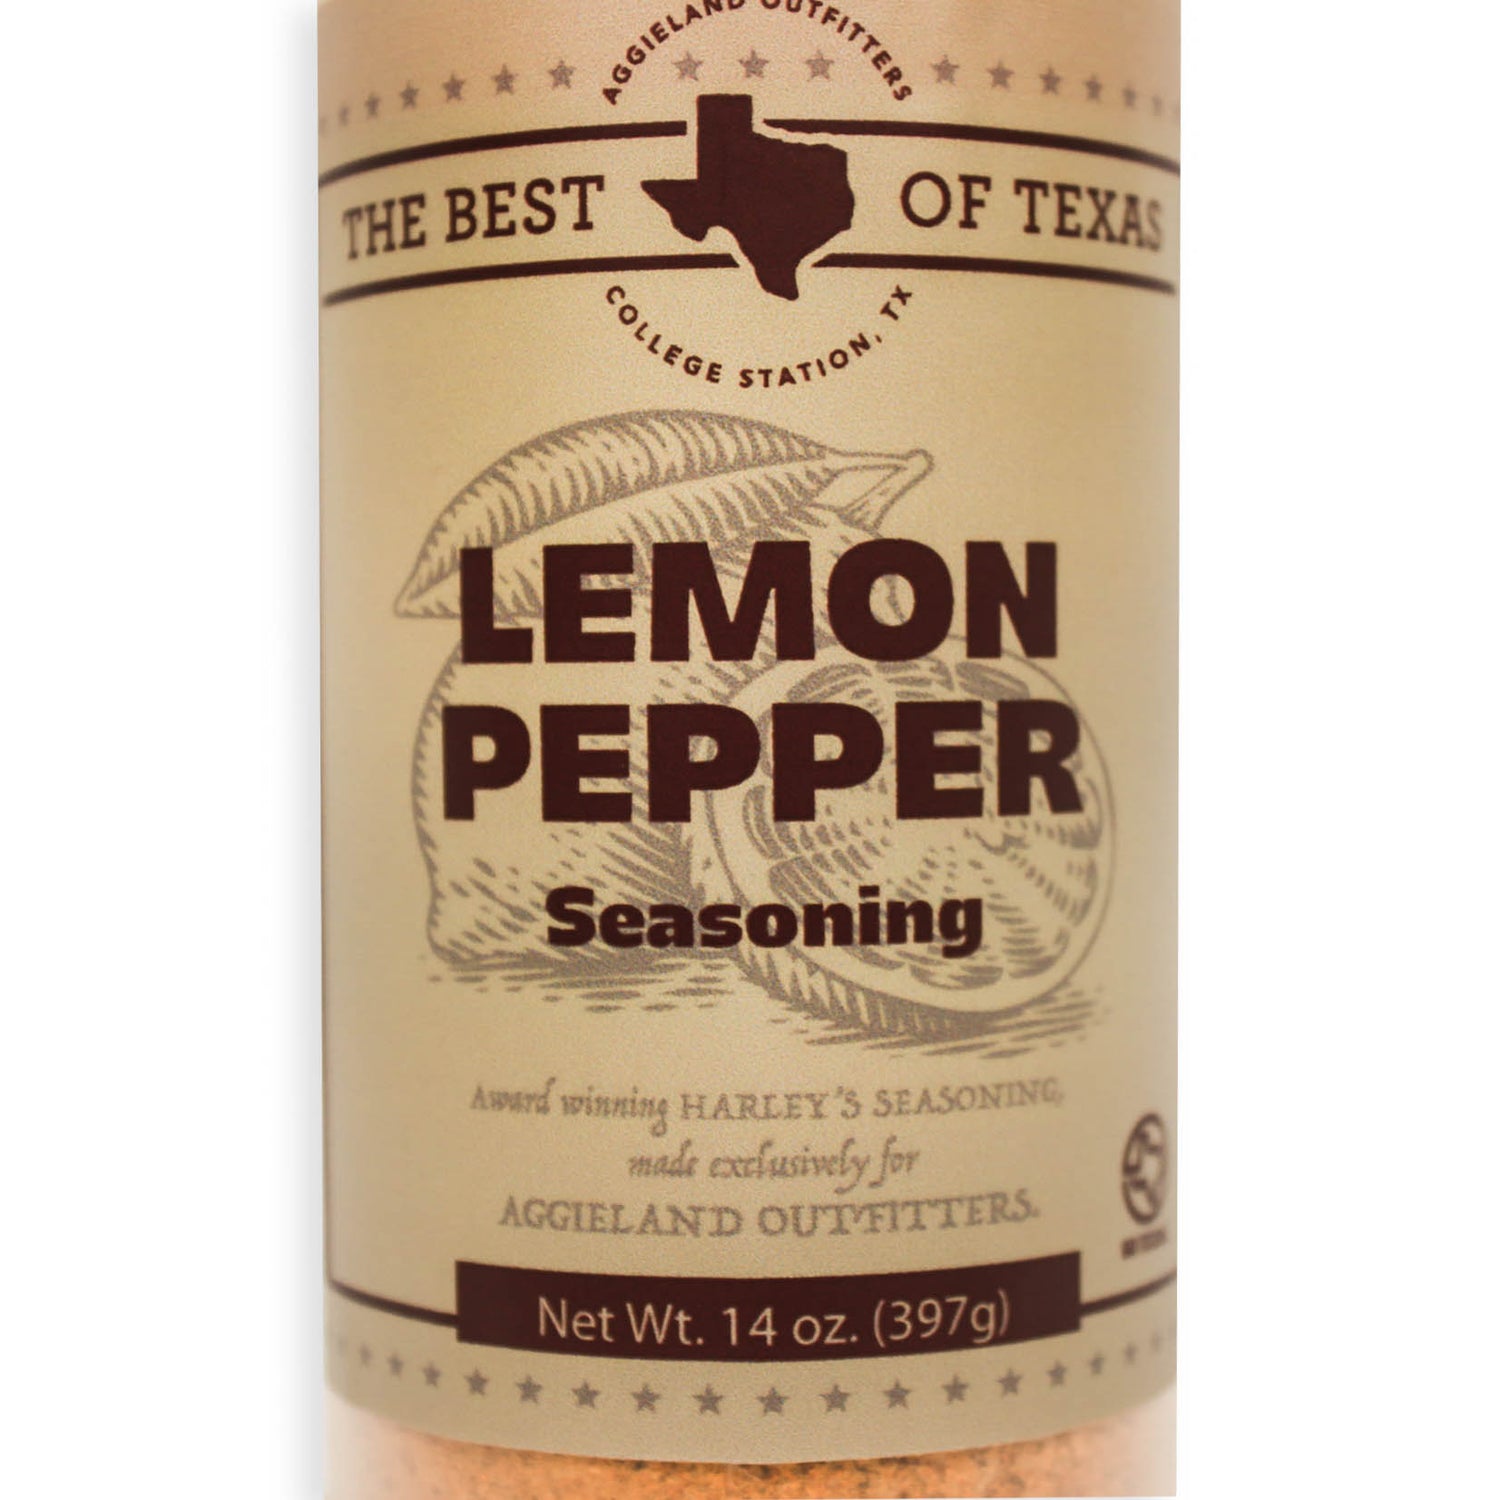 The Best Of Texas Harley's Lemon Pepper Seasoning